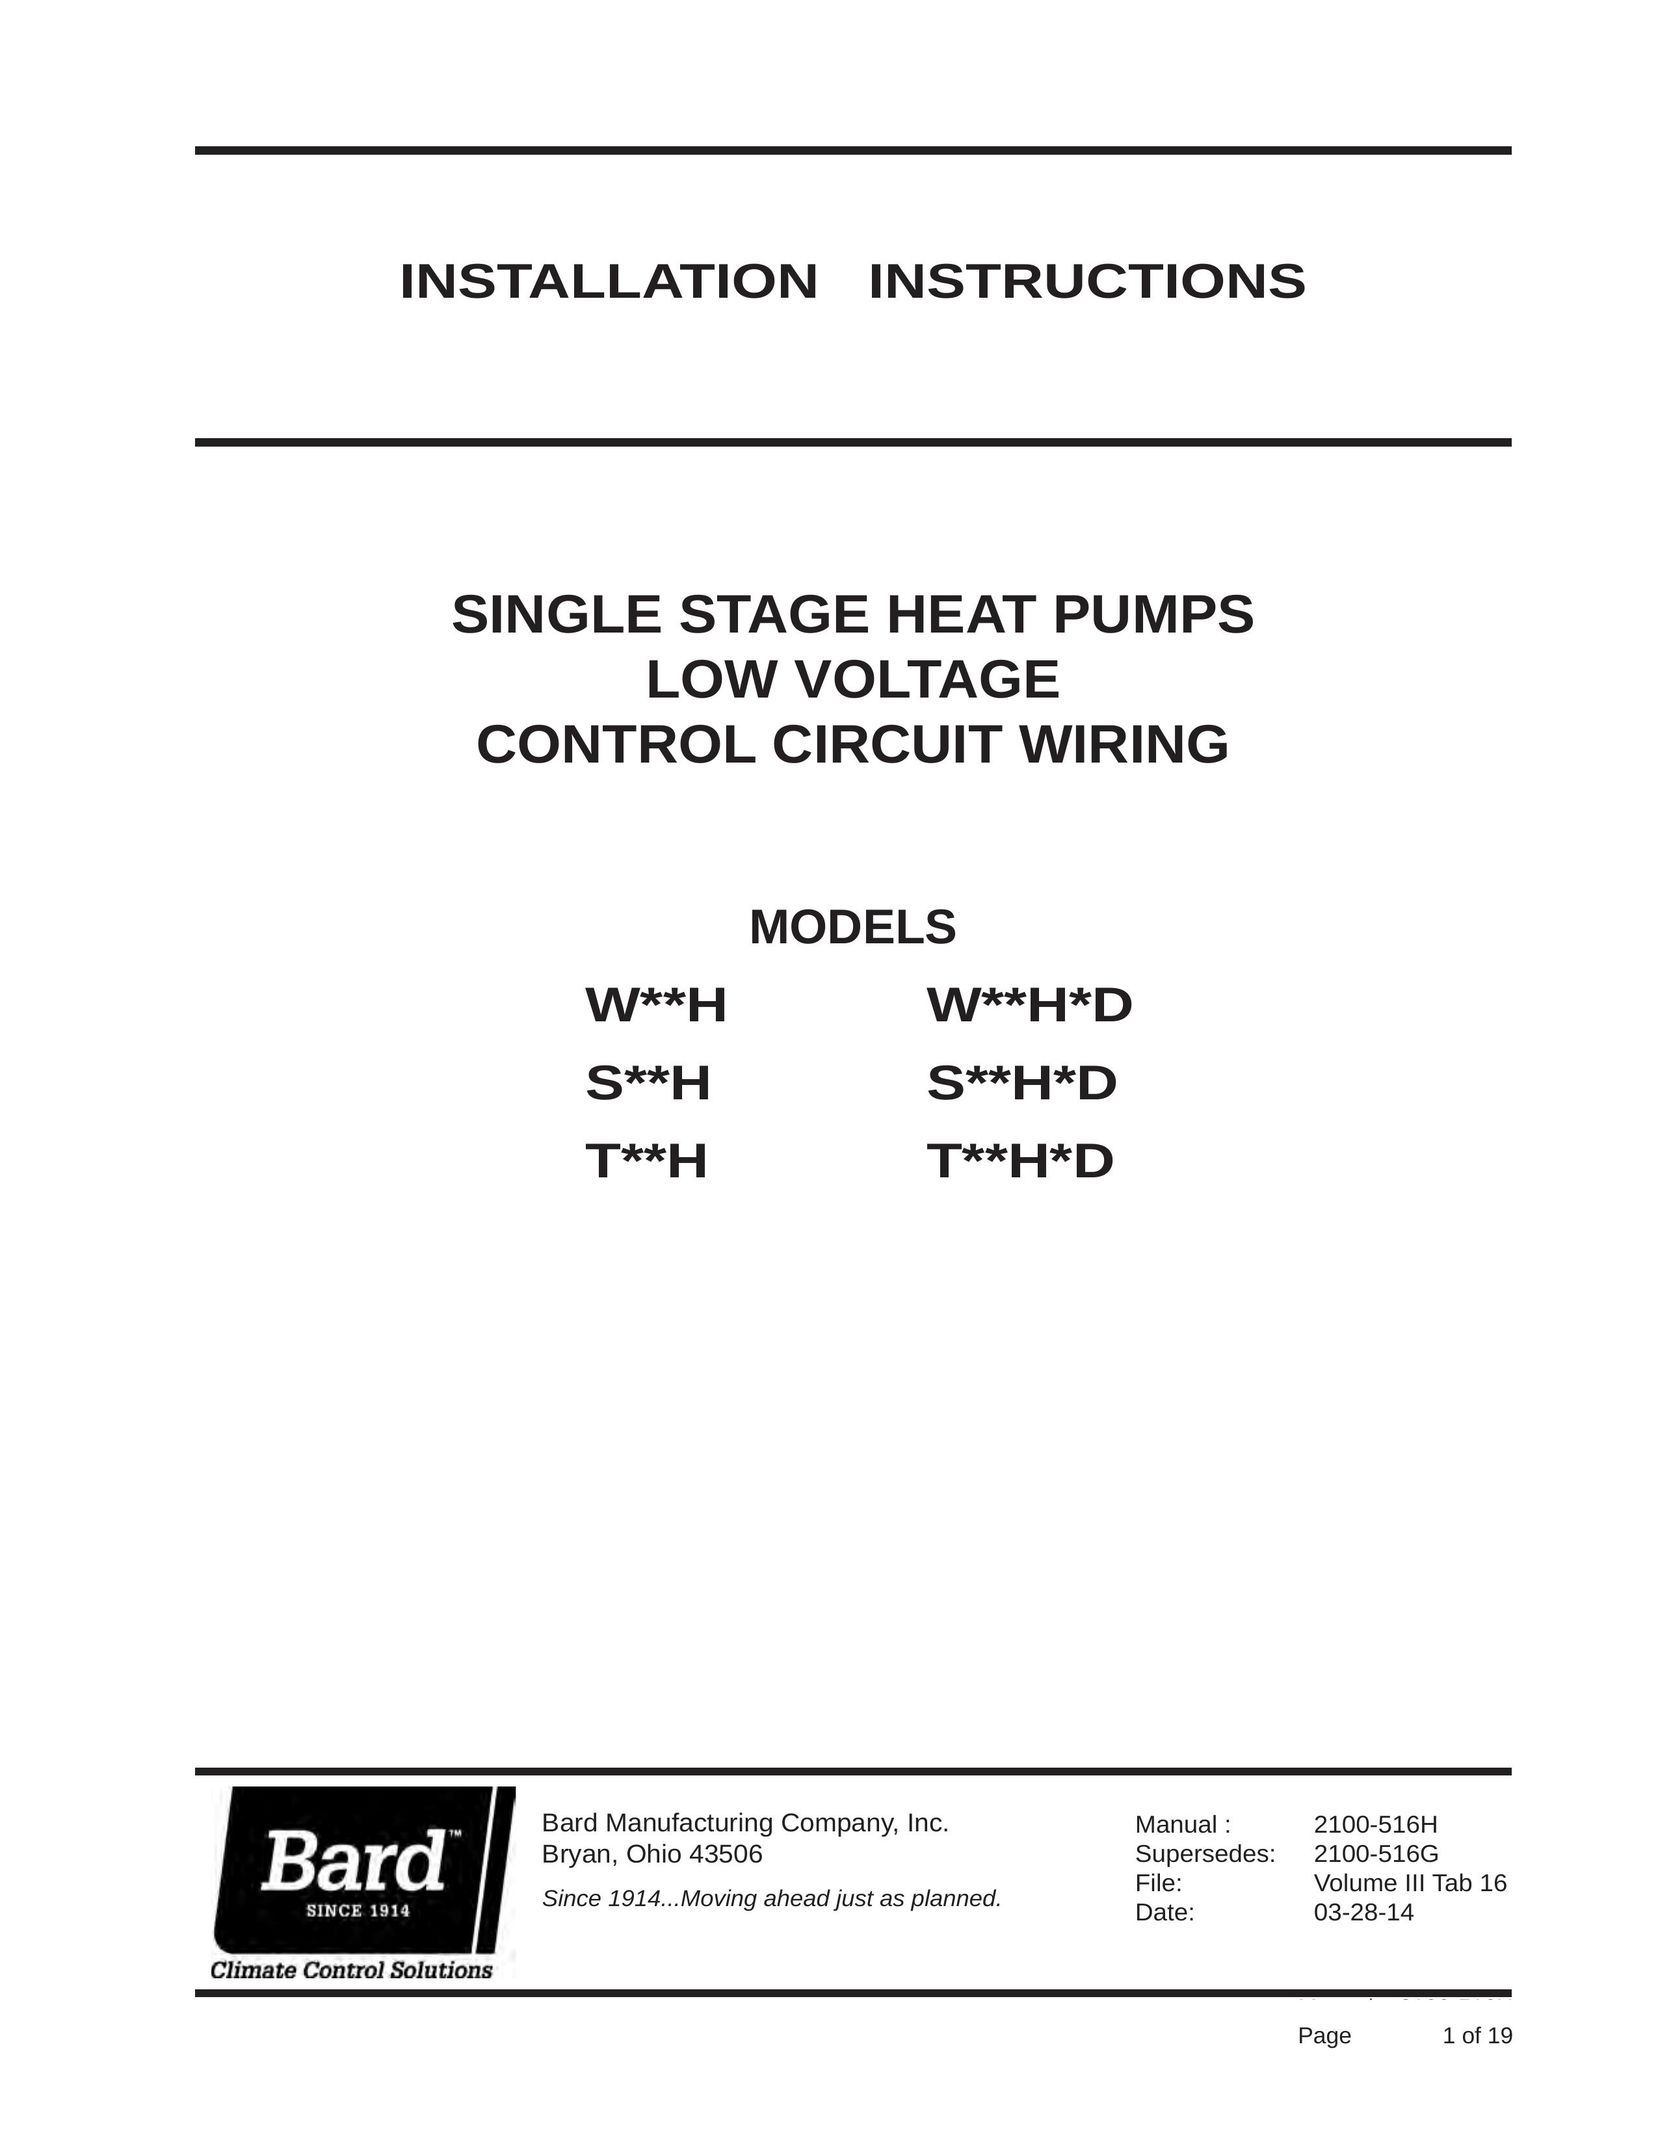 Bard T**H Heat Pump User Manual